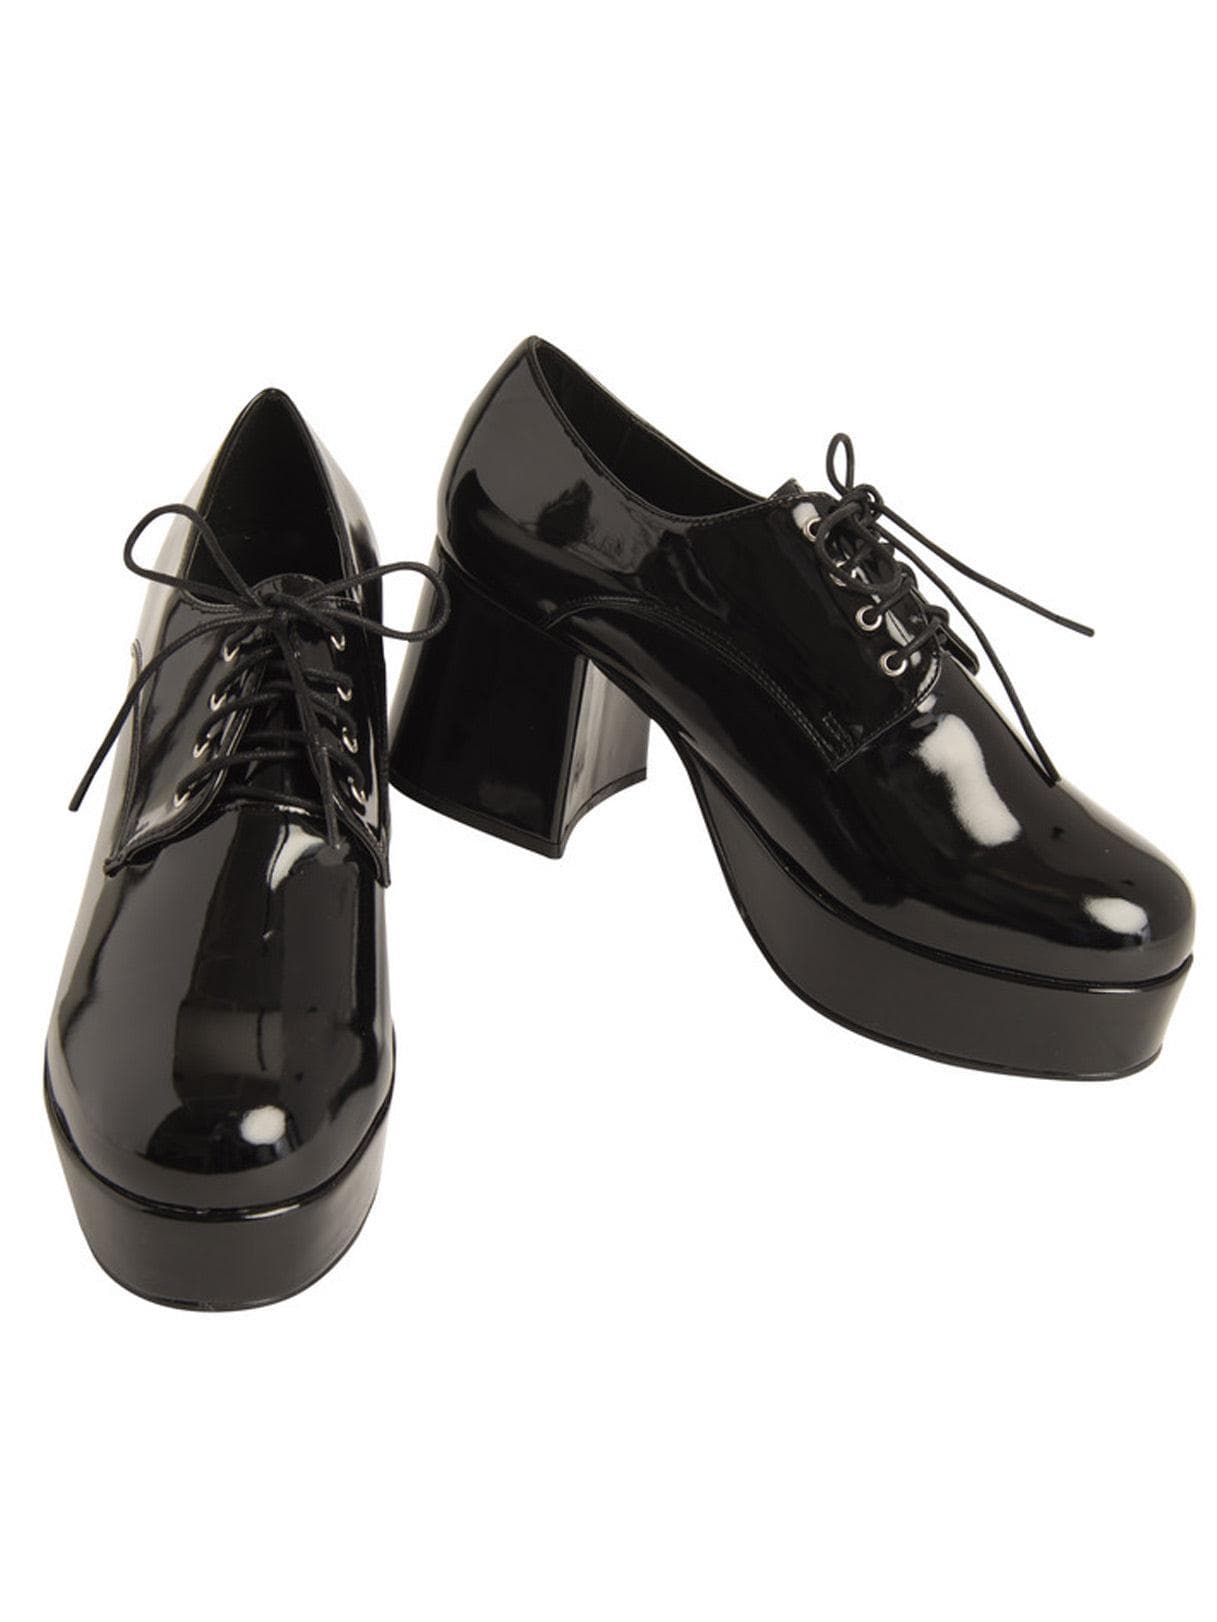 Adult Black 70's Platform Heeled Shoes - costumes.com